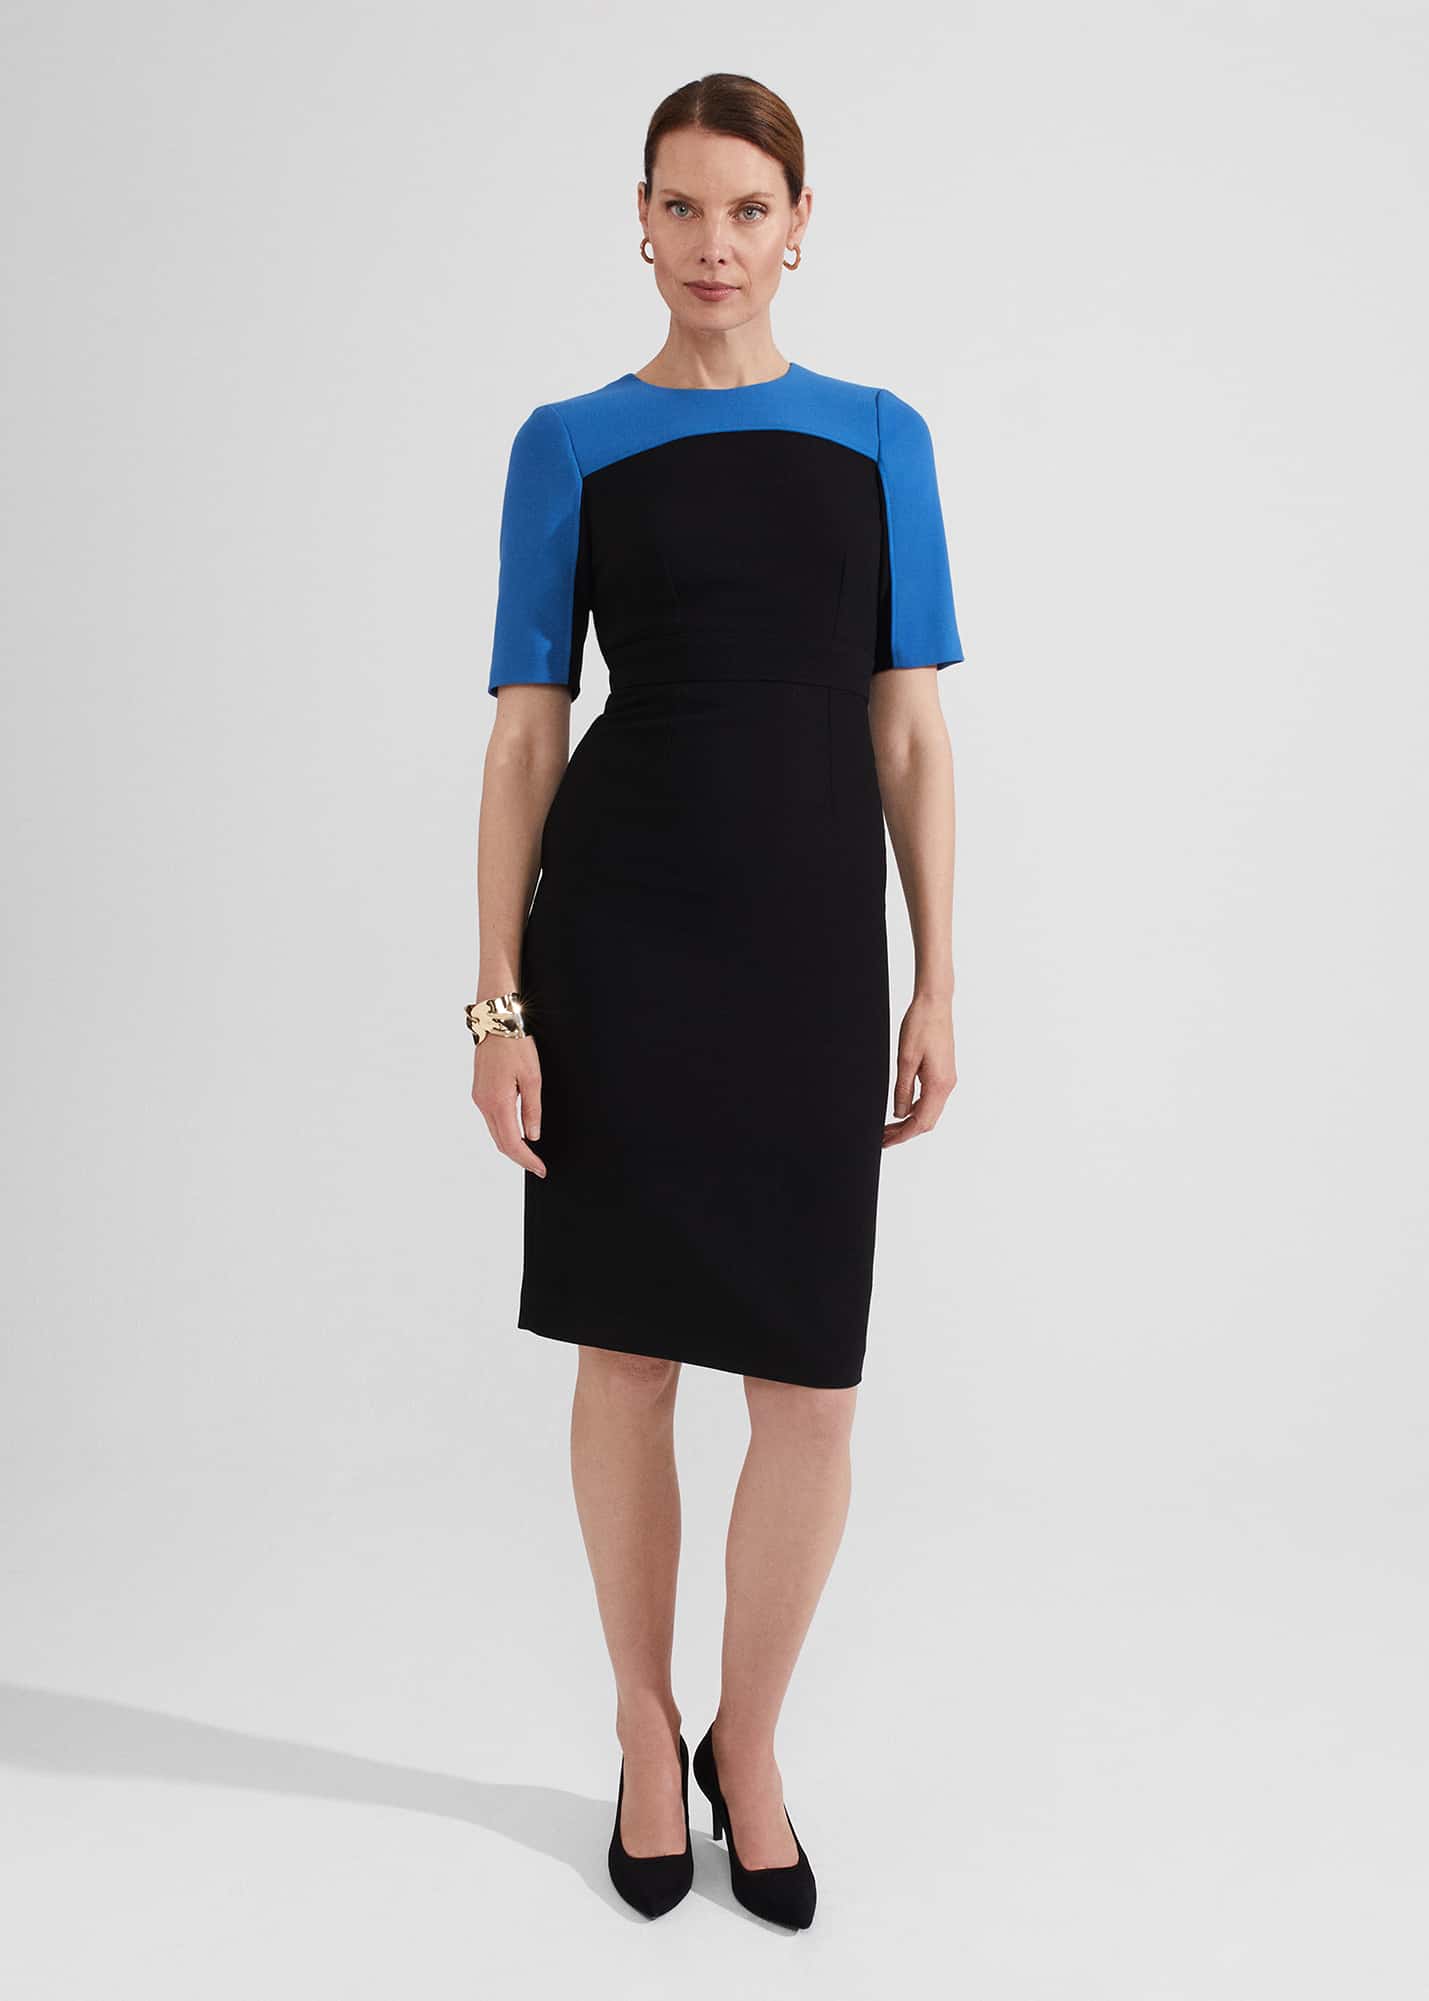 Hobbs Women's Katya Dress - Black Blue